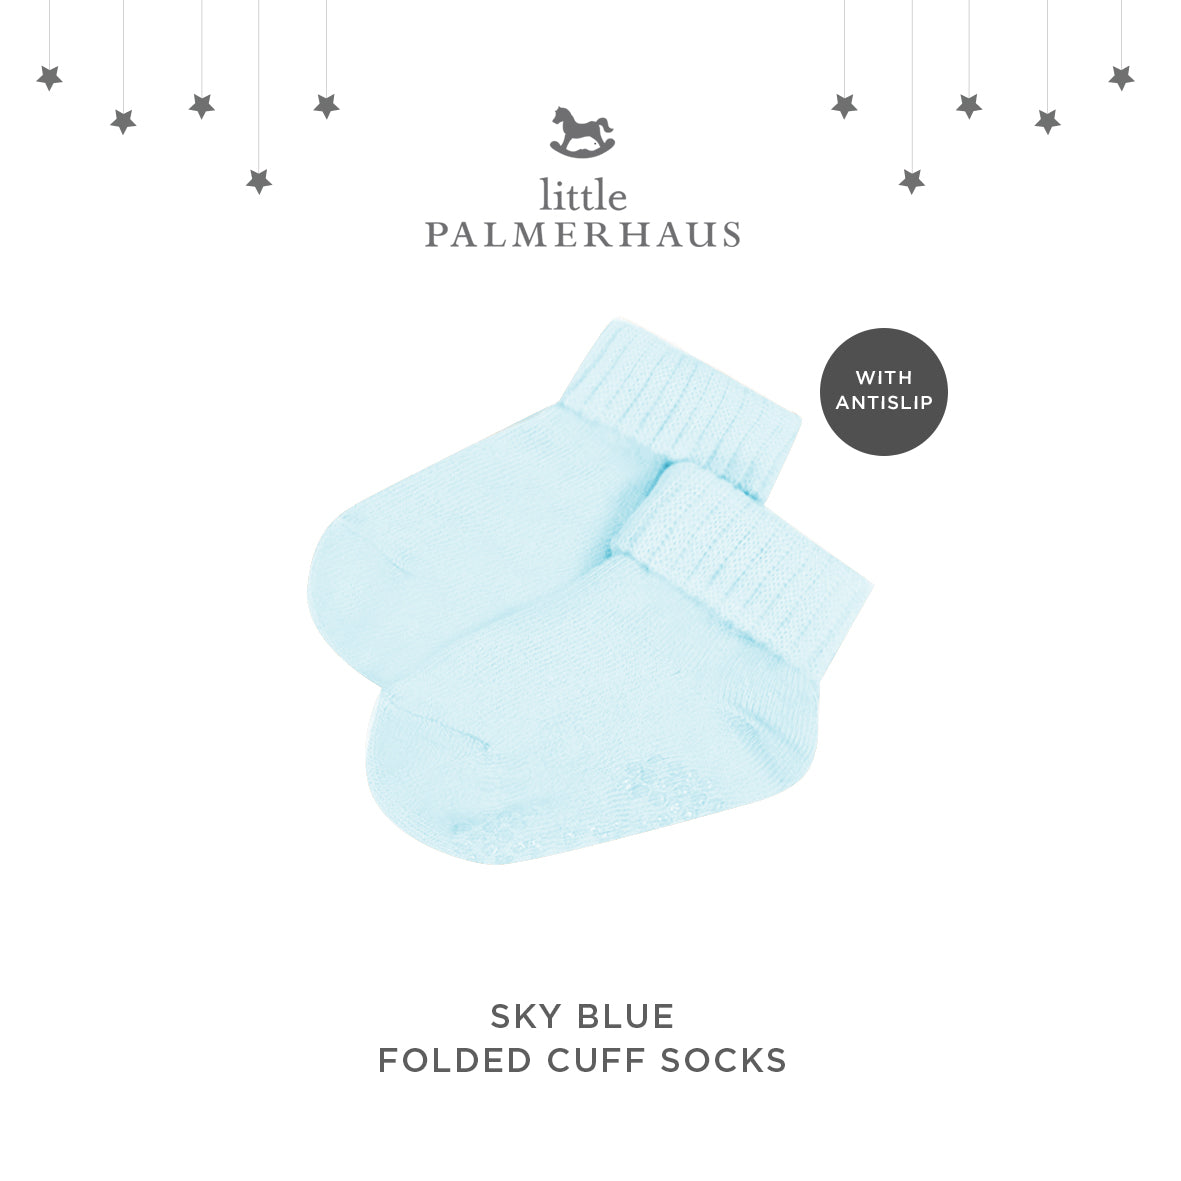 Folded Cuff Socks 4.0